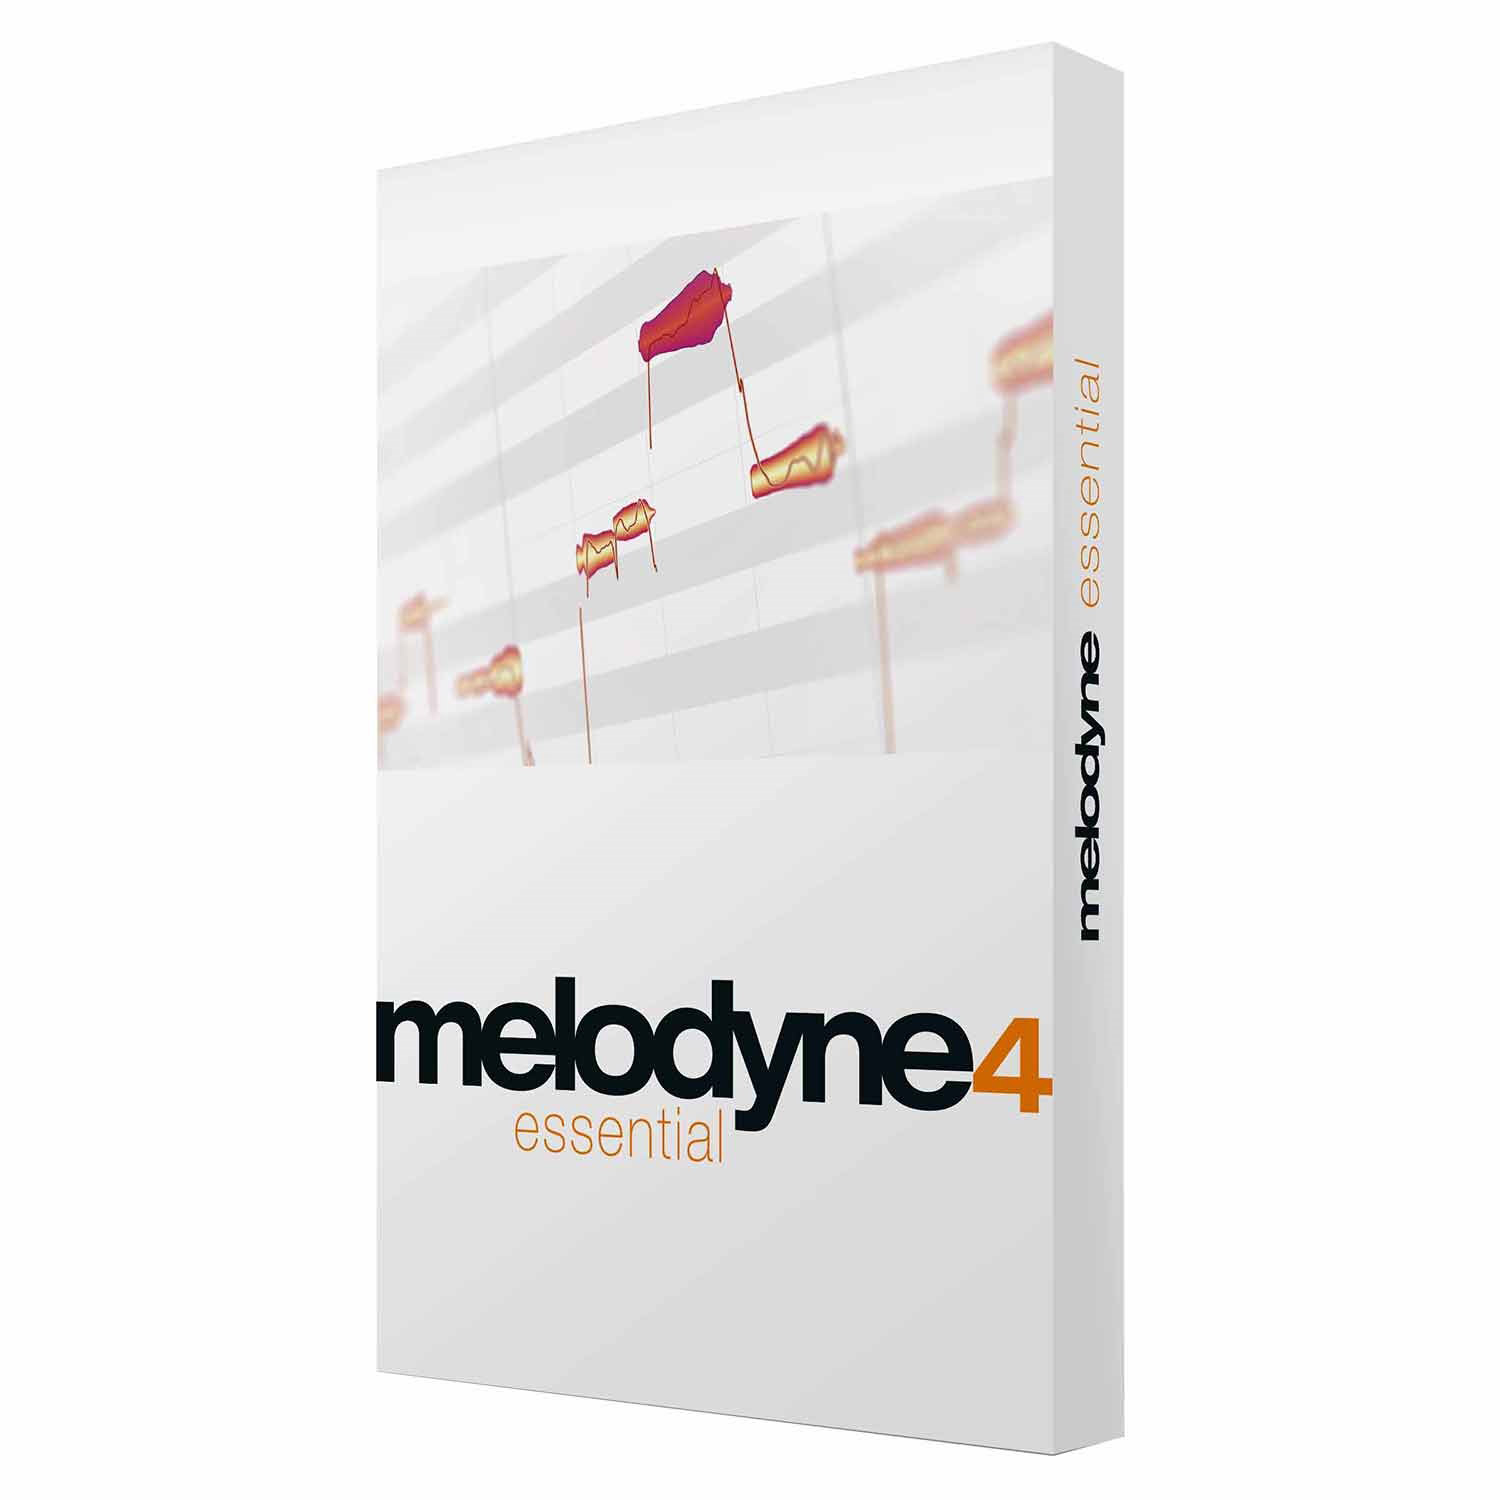 how to crack celemony melodyne 4